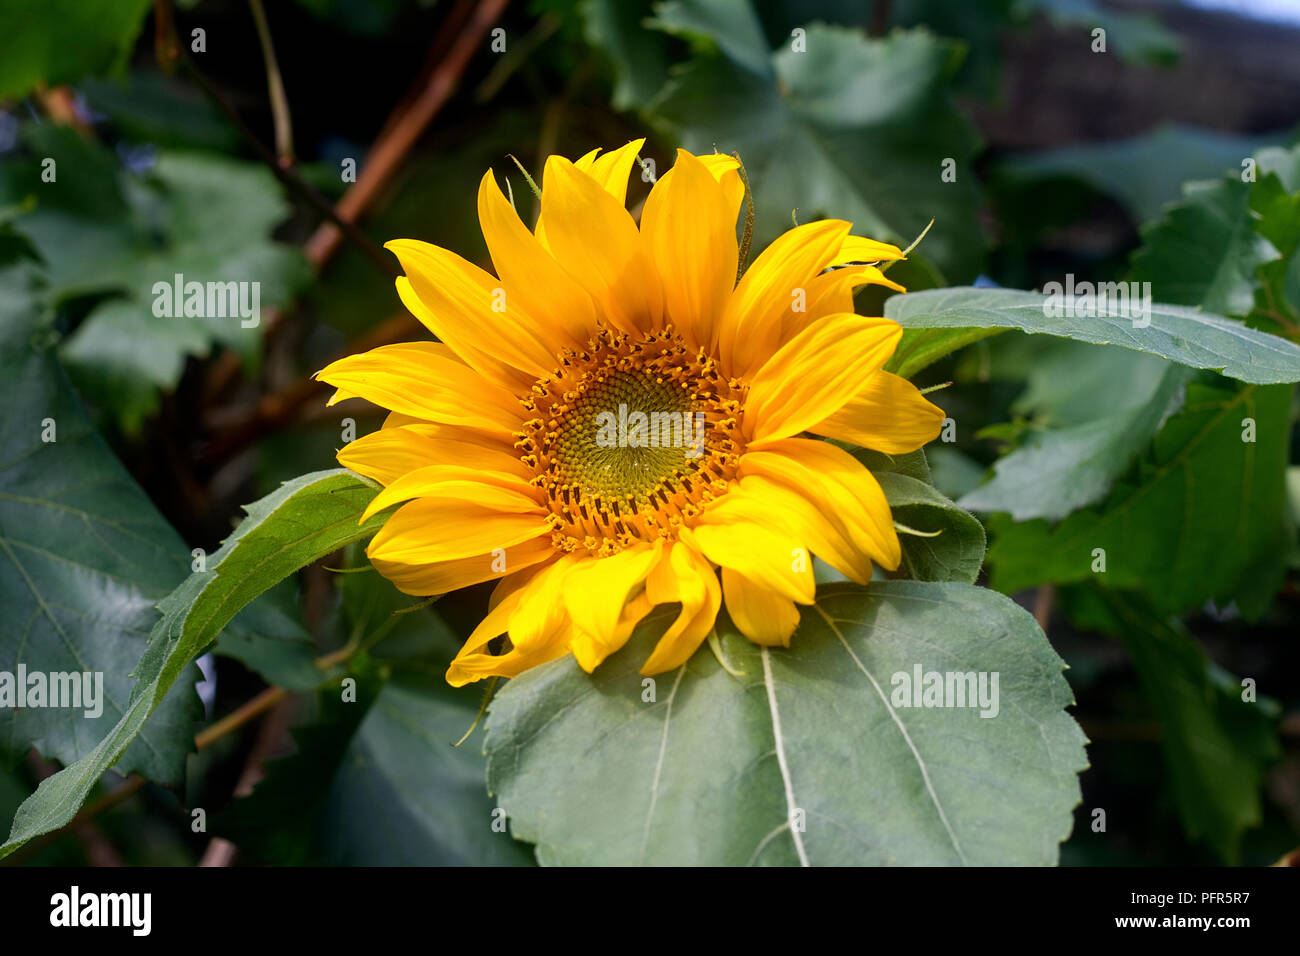 Helianthus or sunflower Stock Photo